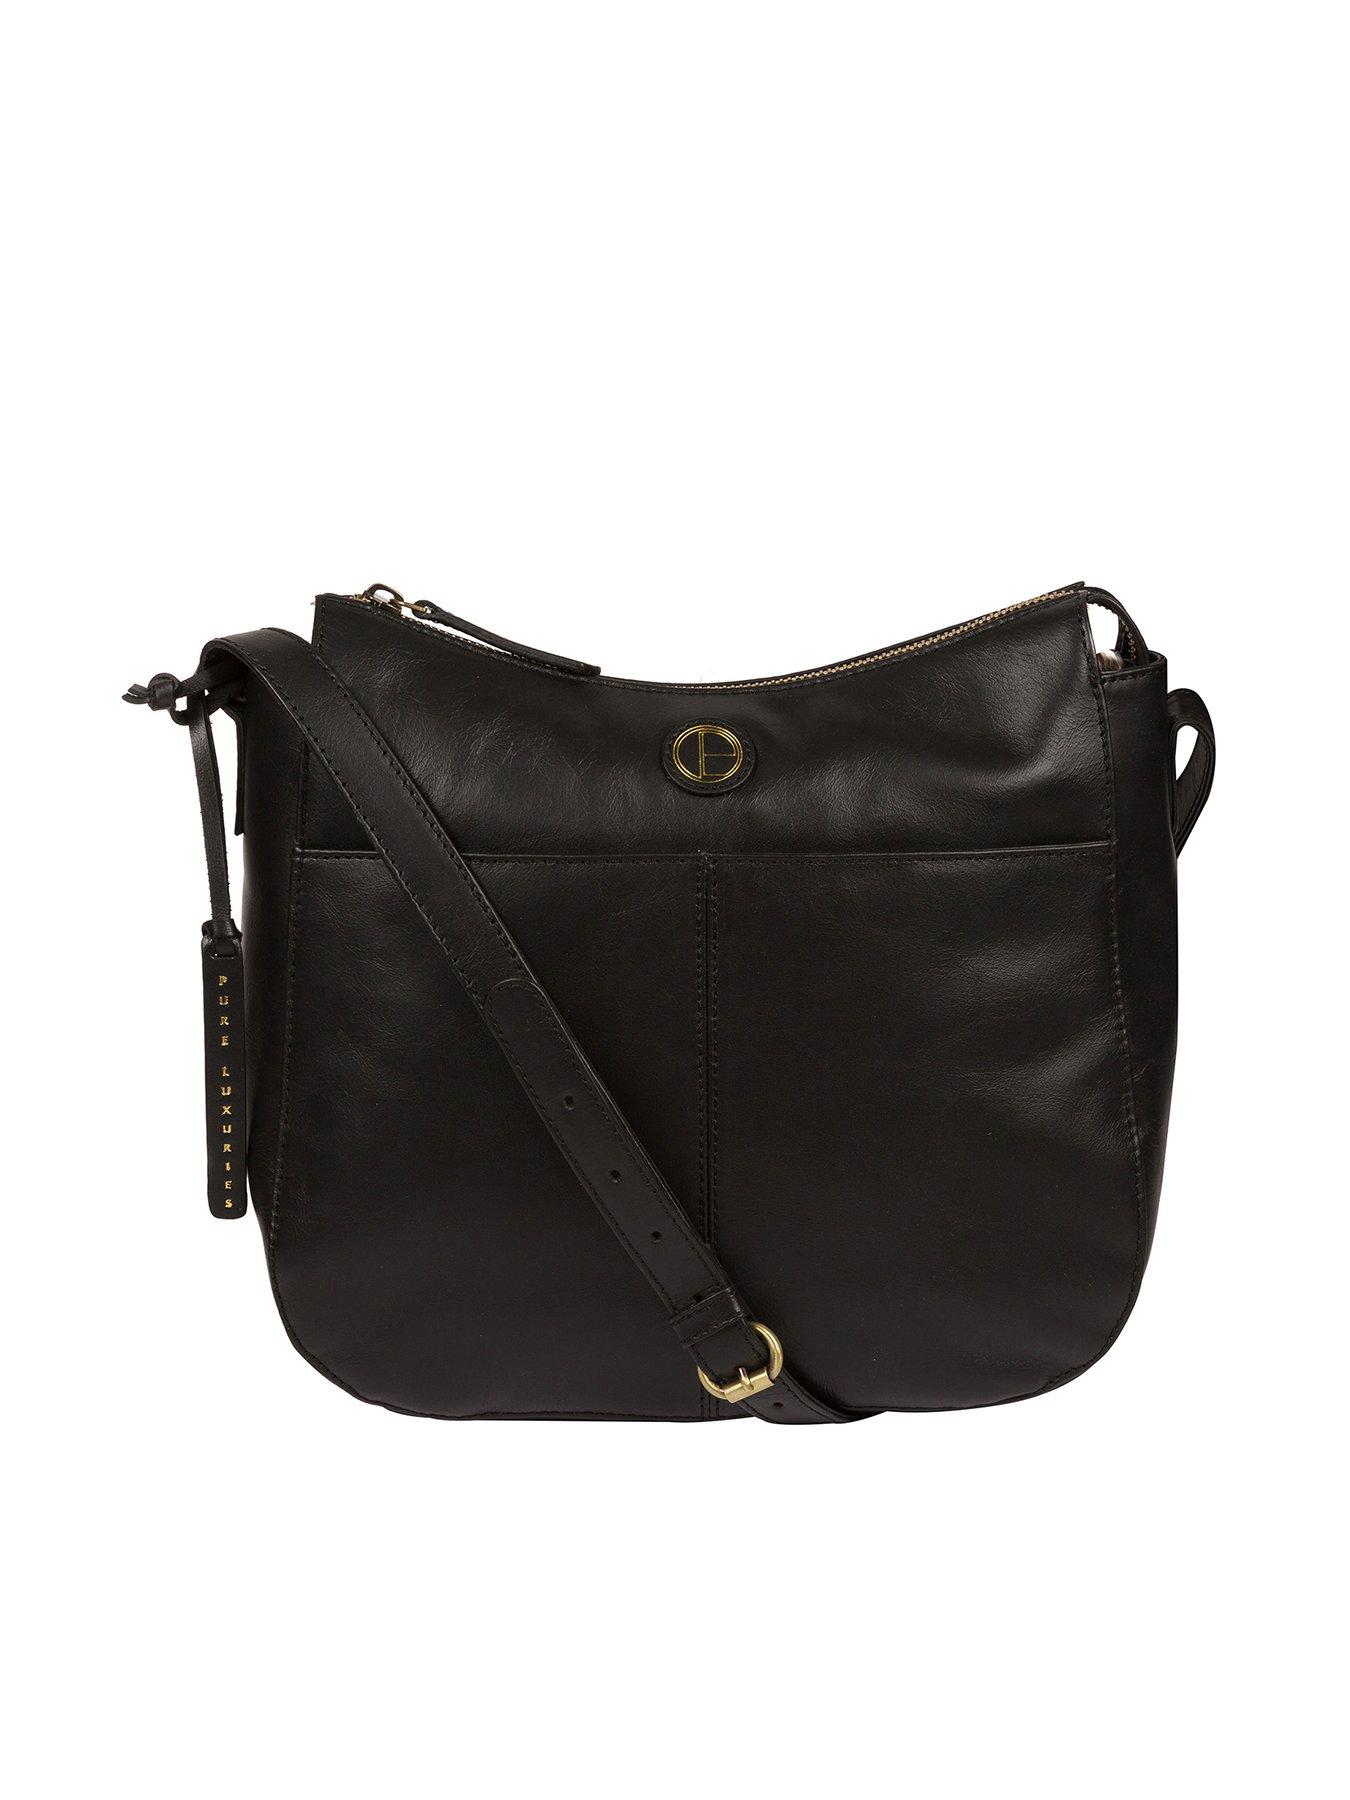 Bags & Purses Farlow Vintage Leather Zip Top Shoulder Bag - Black